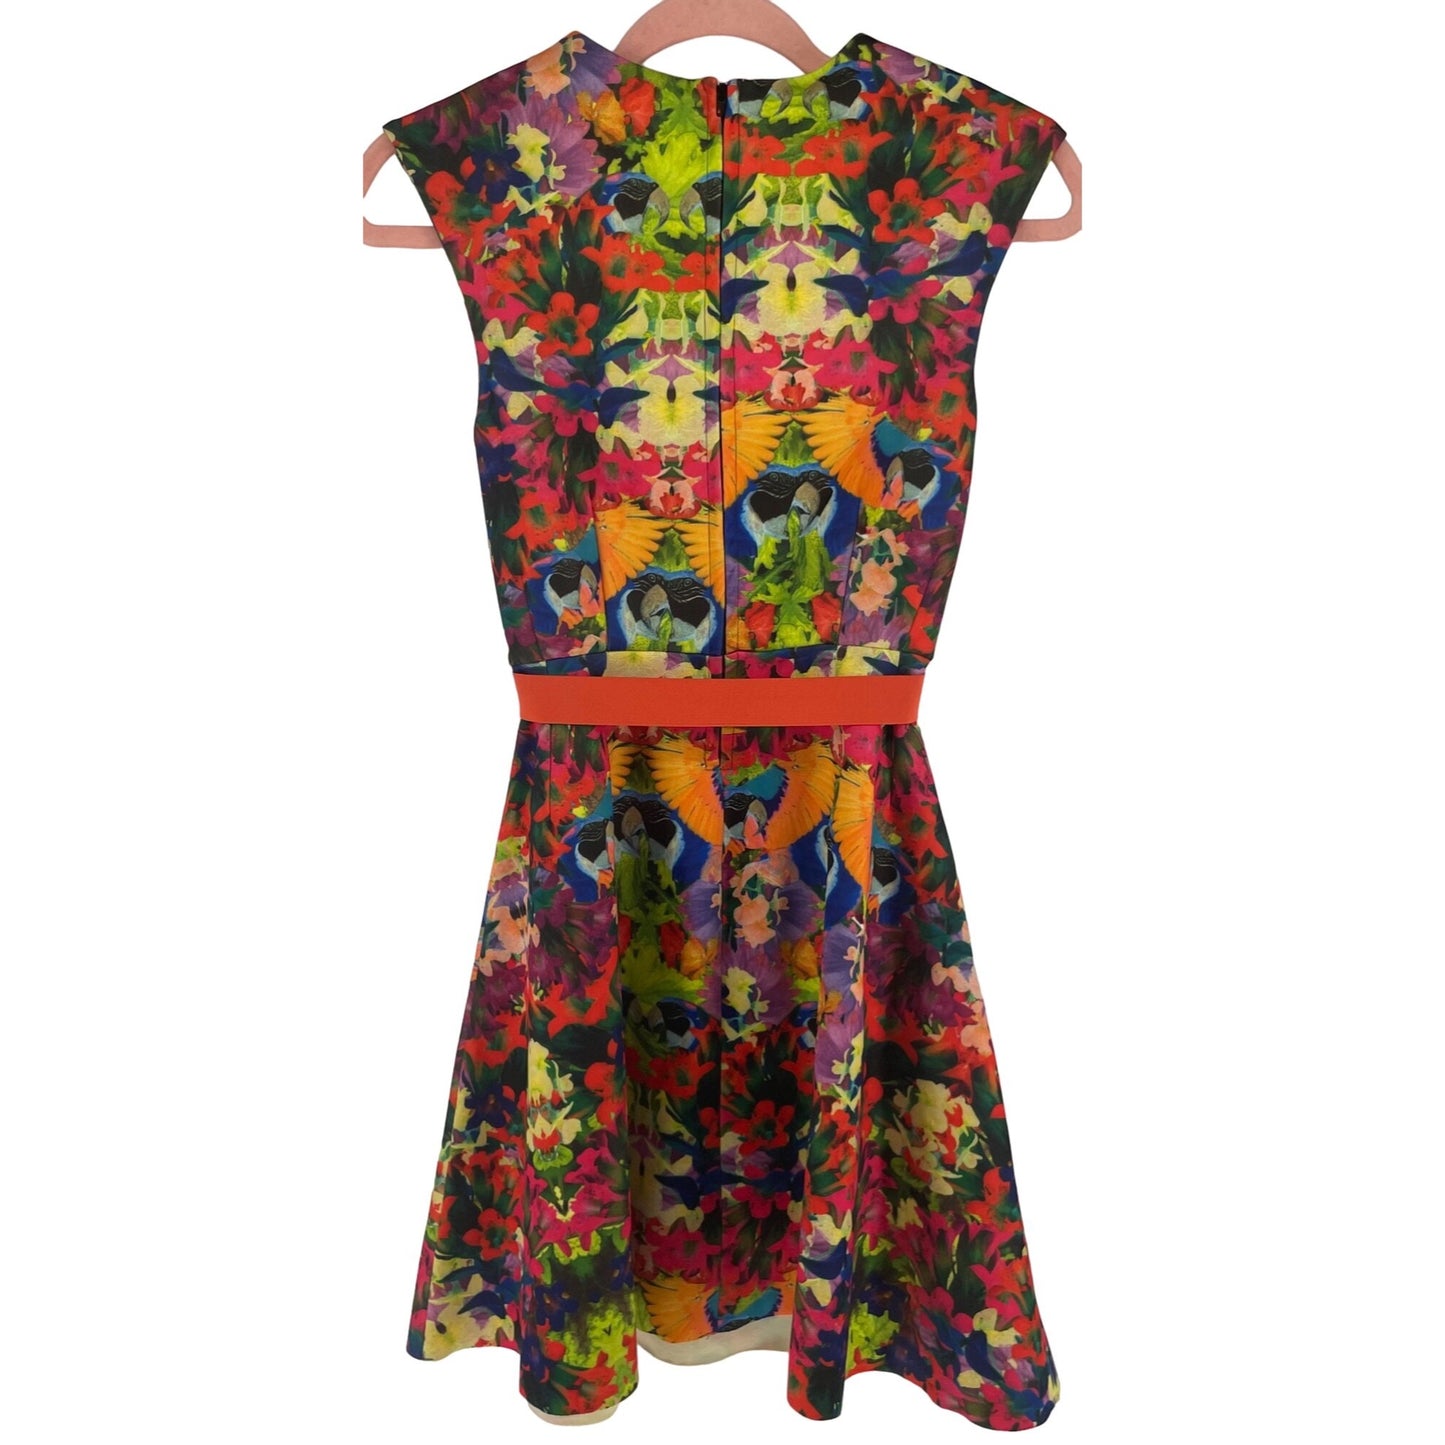 H&M Women's Size 2 Sleeveless Multi-Colored Tropical Print A-Line Dress W/ Belt